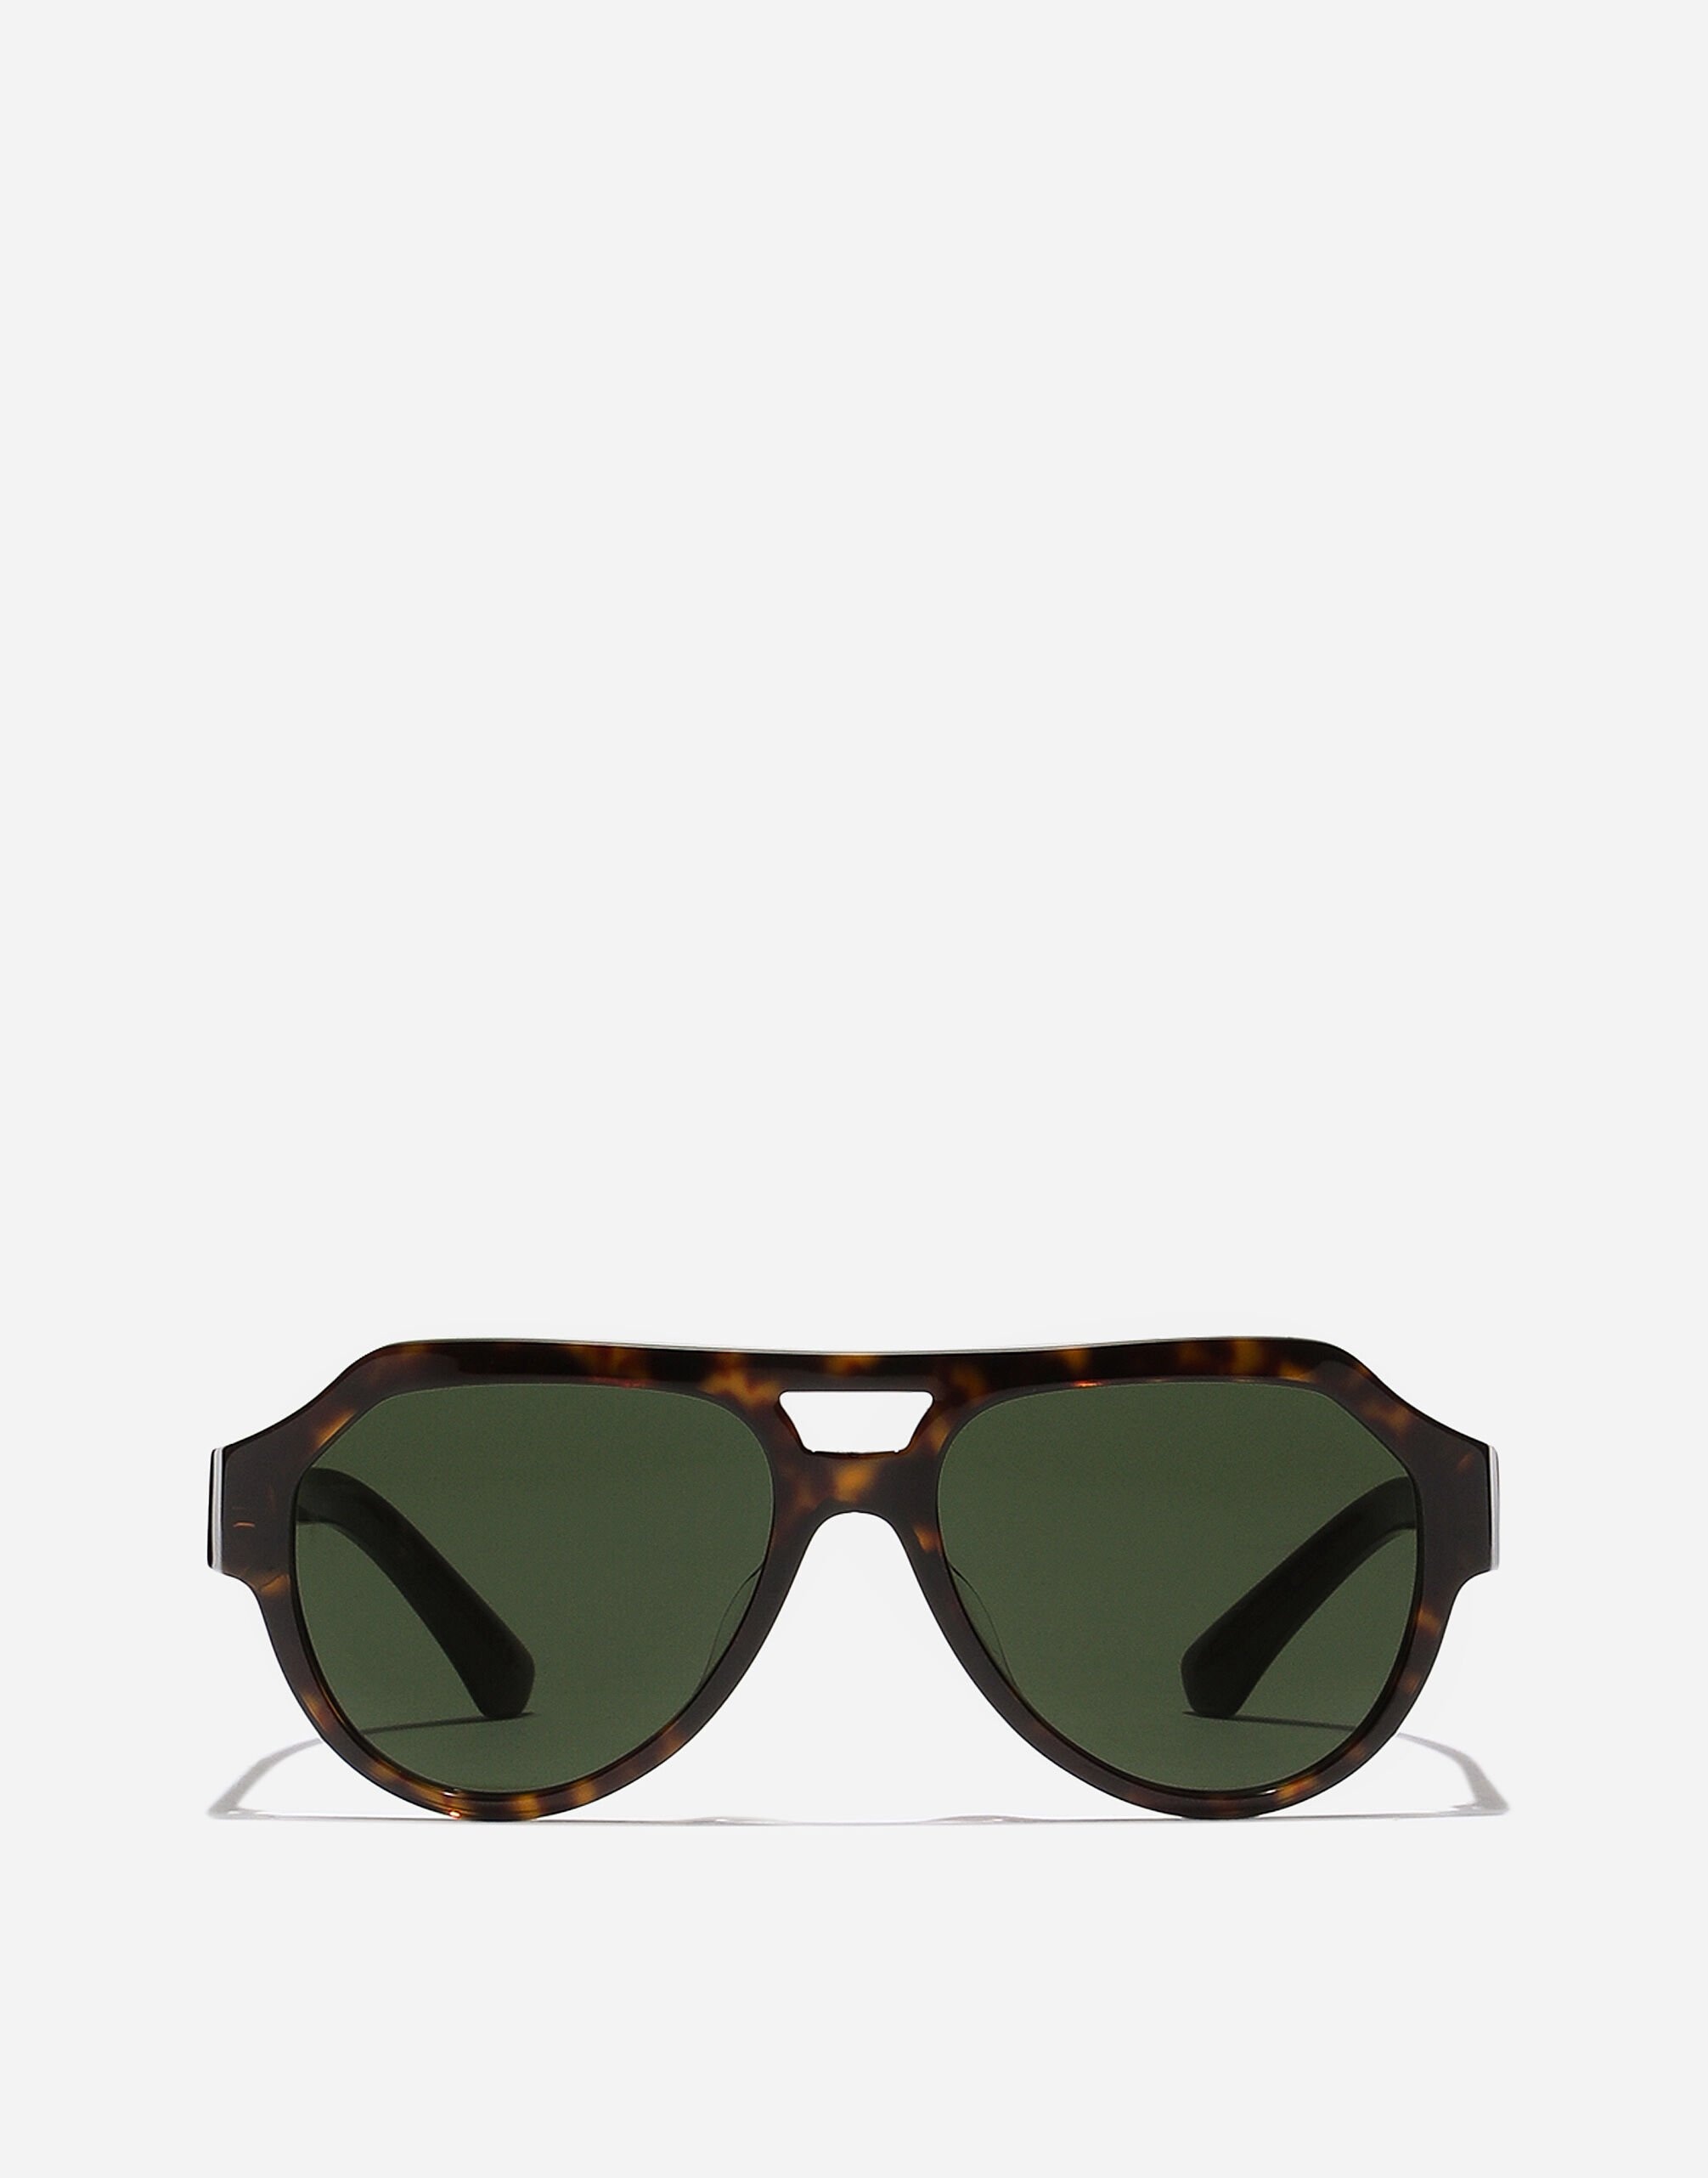 Mirror logo sunglasses - 1